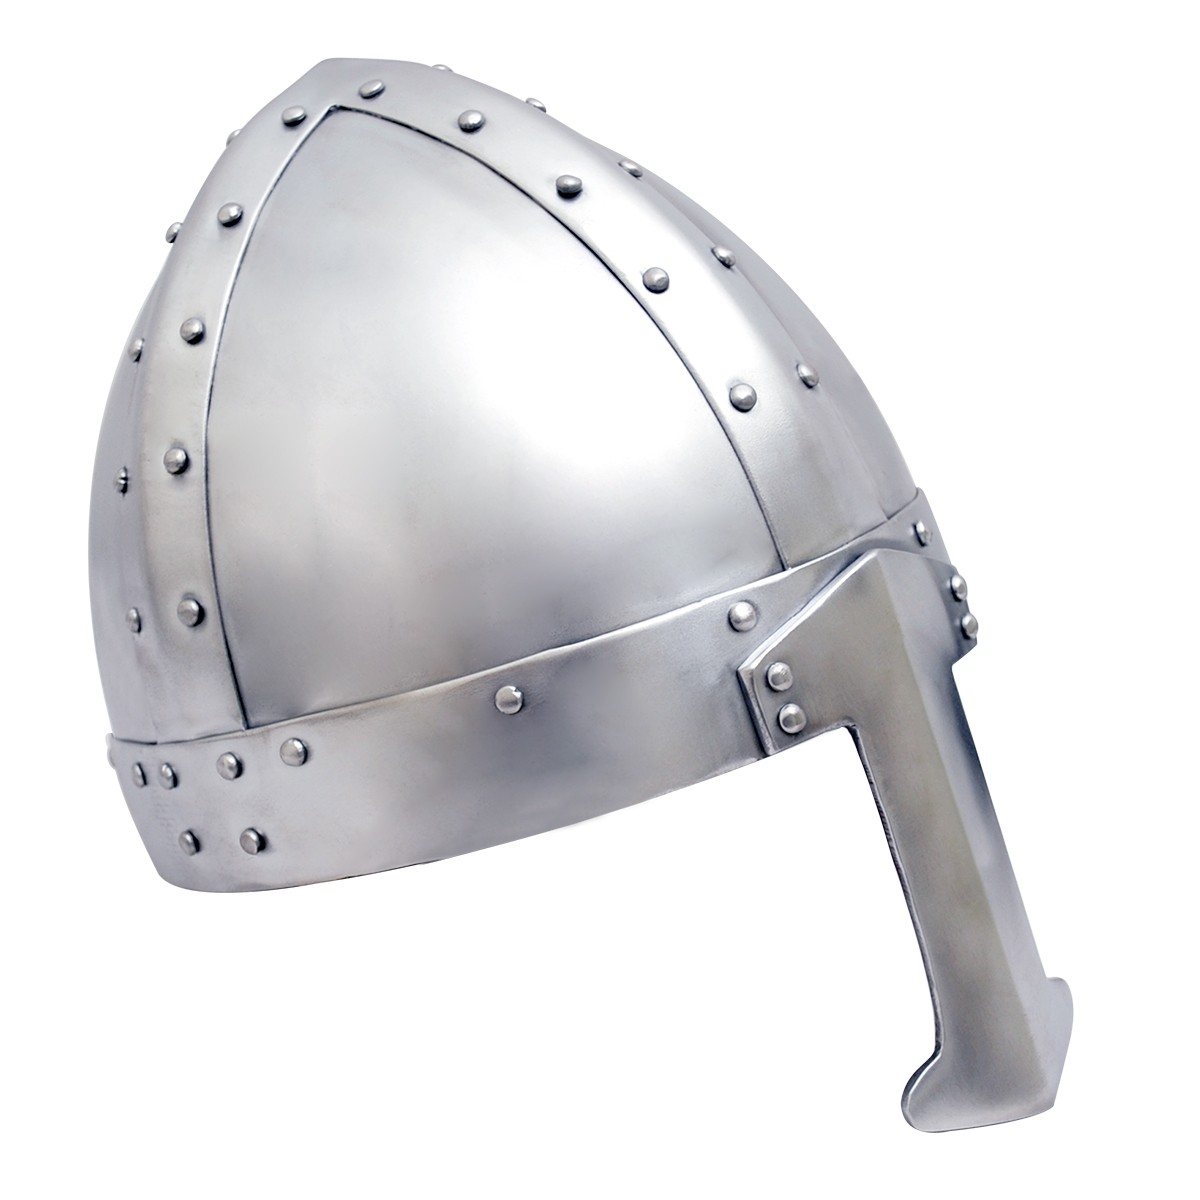 Armour Medieval Norman Spangenhelm Armor Reenactment Helmet 